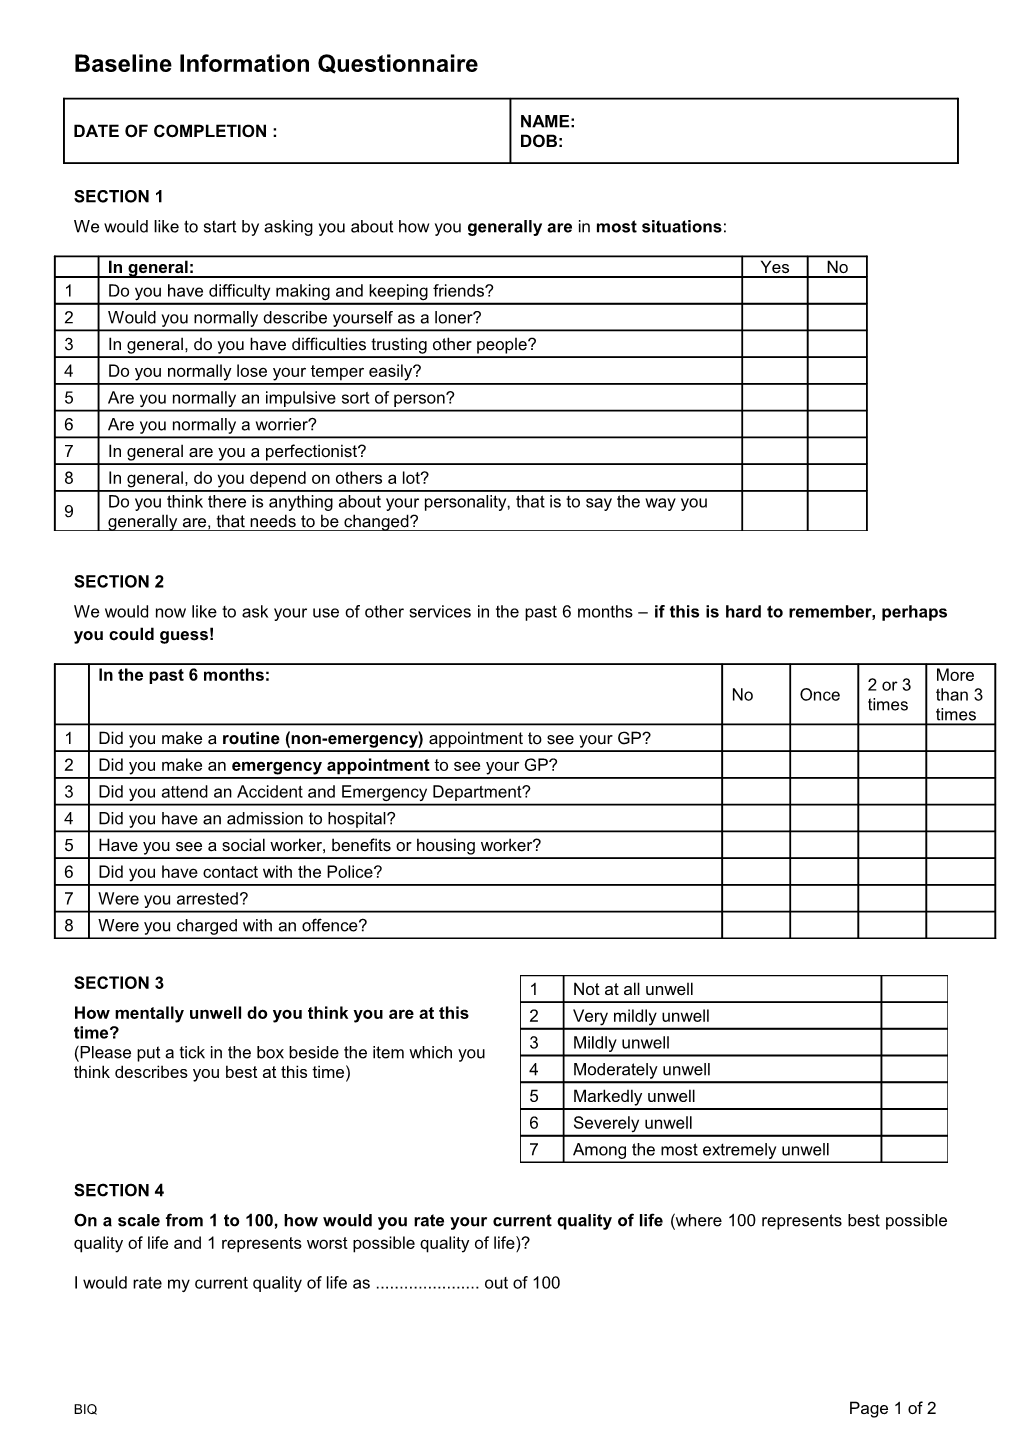 Baseline Information Questionnaire